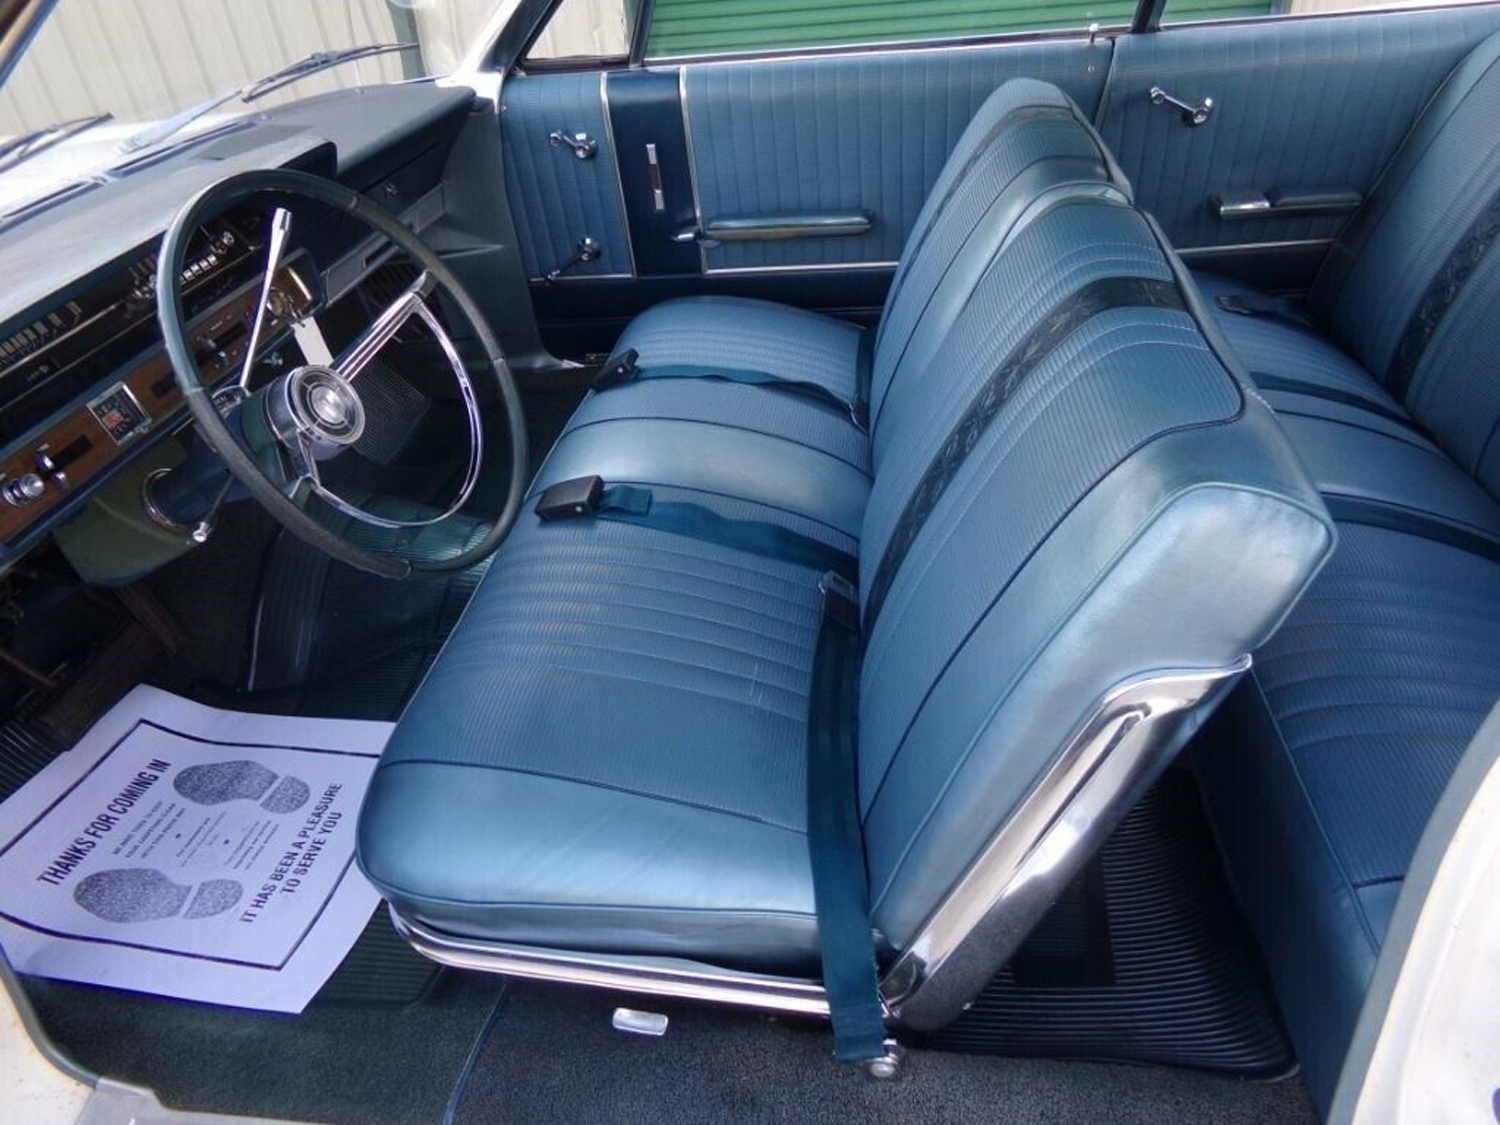 All Original 1966 Ford Galaxie 500 Has 44 000 Miles